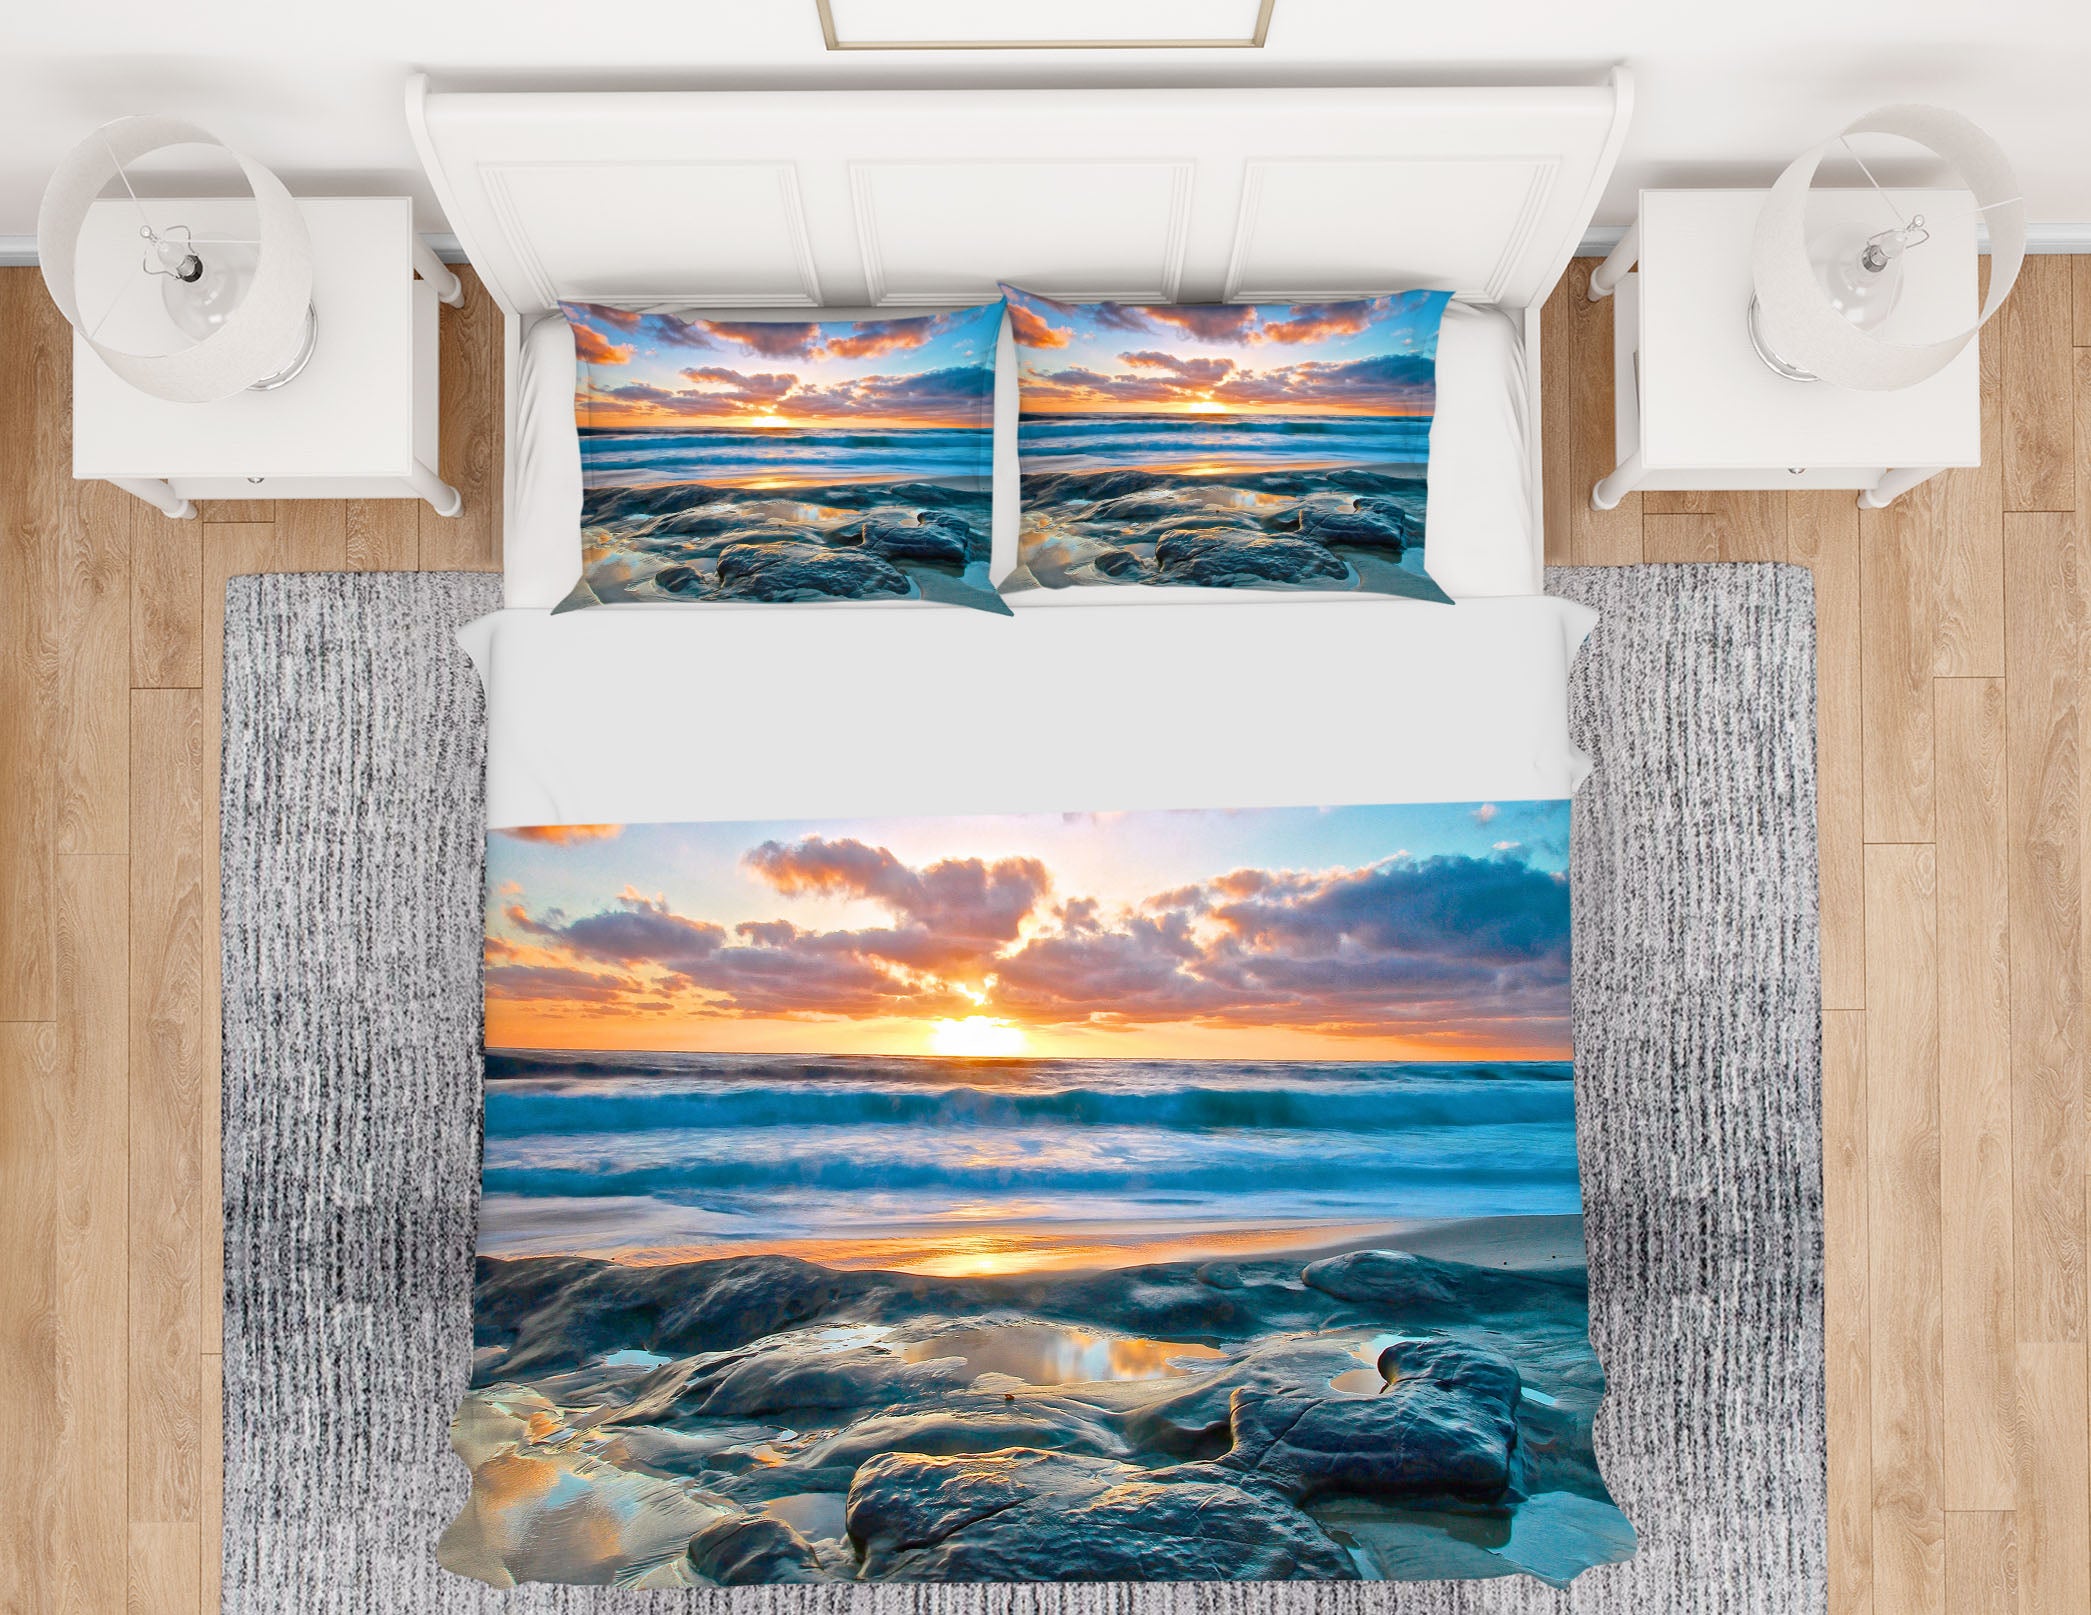 3D Seaside Sunshine Stone 8684 Kathy Barefield Bedding Bed Pillowcases Quilt